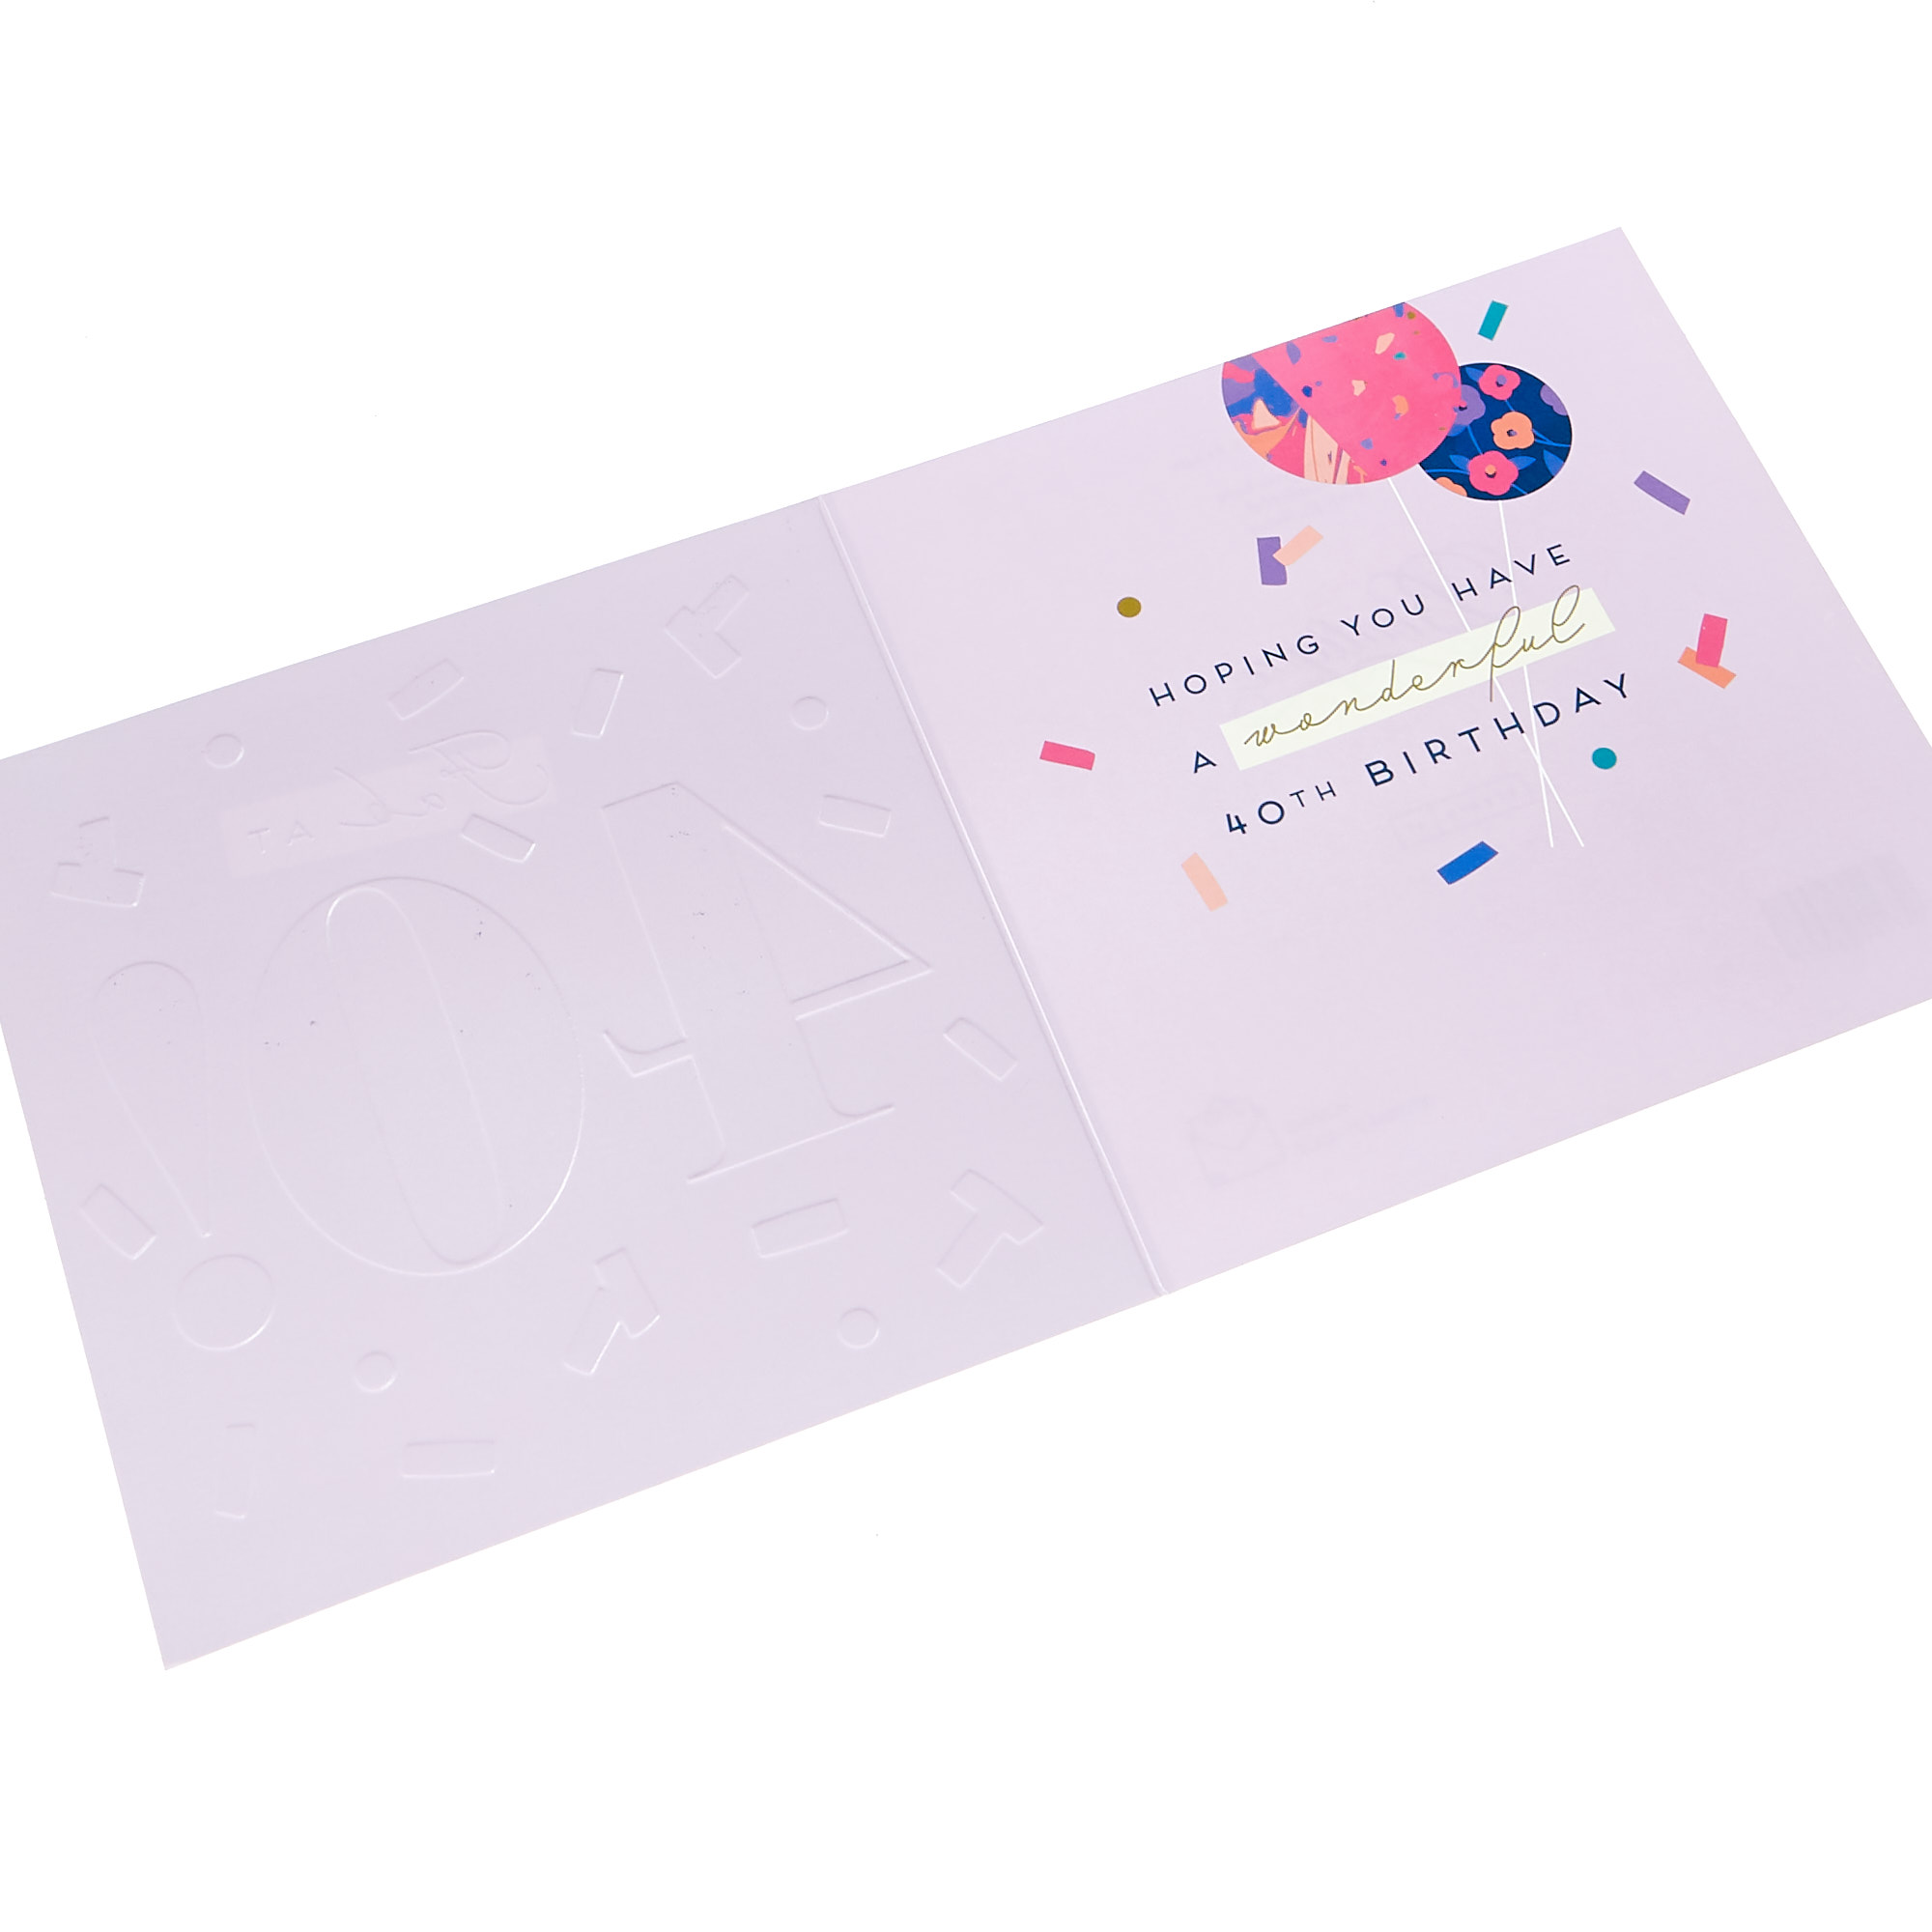 Buy Boutique 40th Birthday Card - Fab Confetti for GBP 1.49 | Card ...